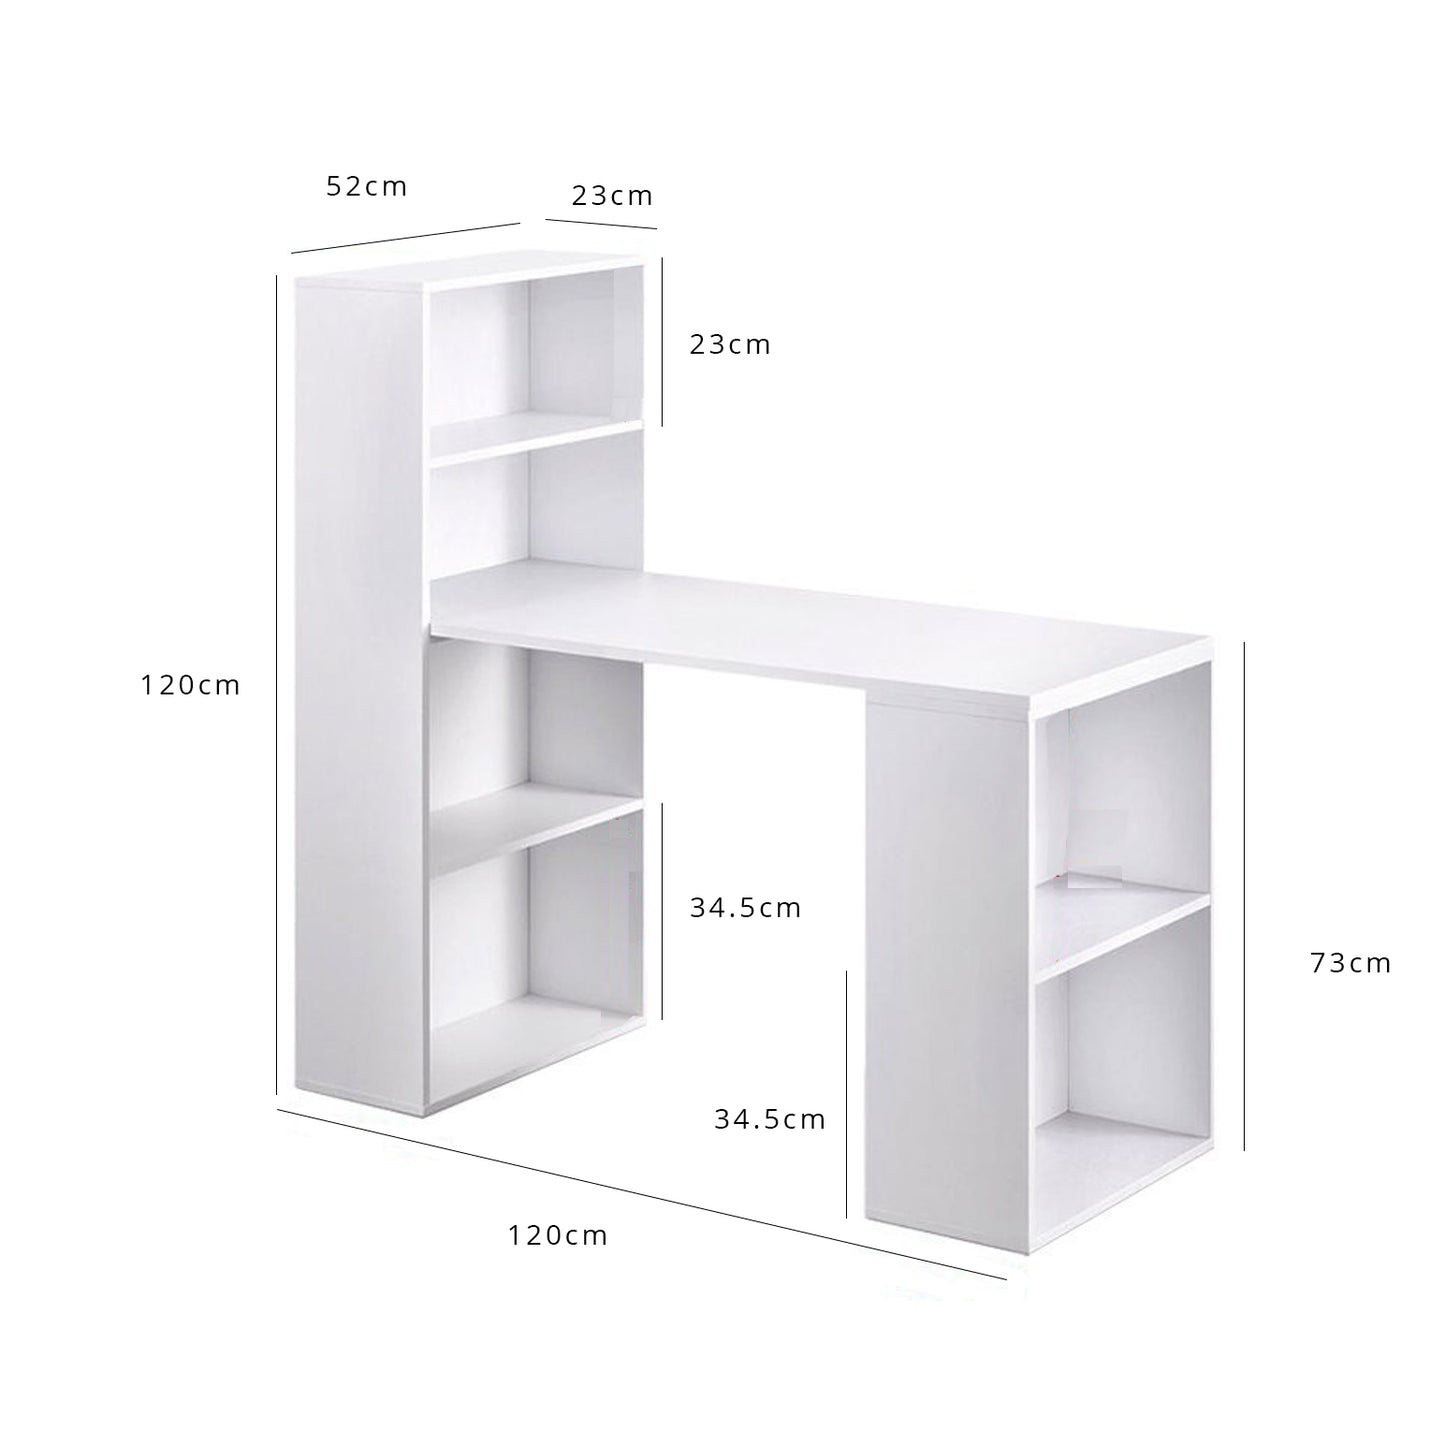 Essie desk with shelves - white